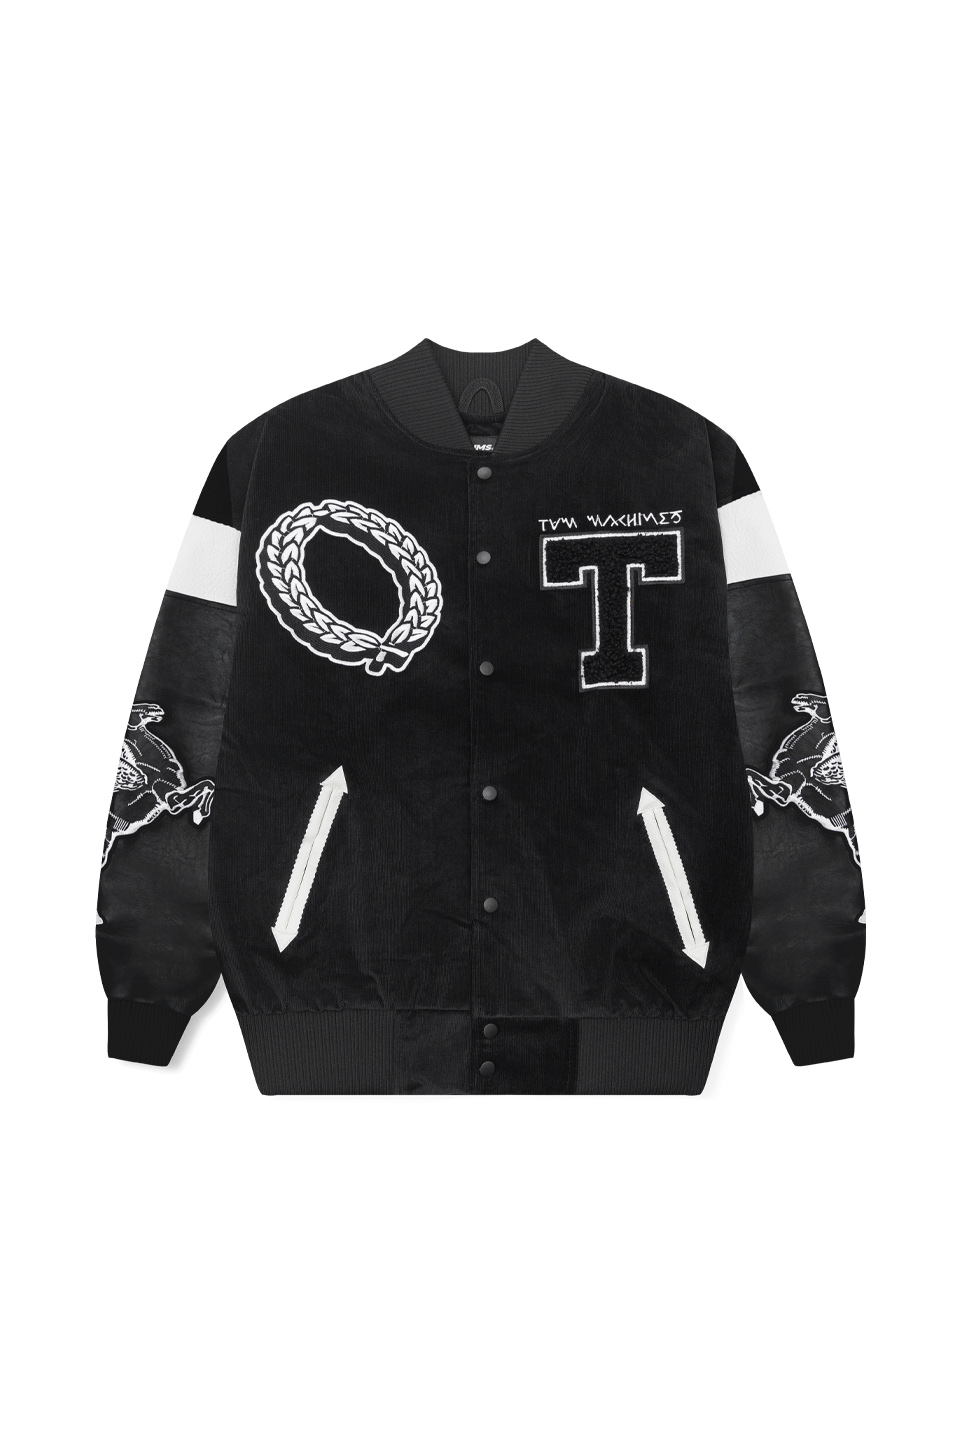 Tum Machines - Scarlet Kingsnake Hoodie Gucci Inspired size S M L XL , giá  480 #tummachines